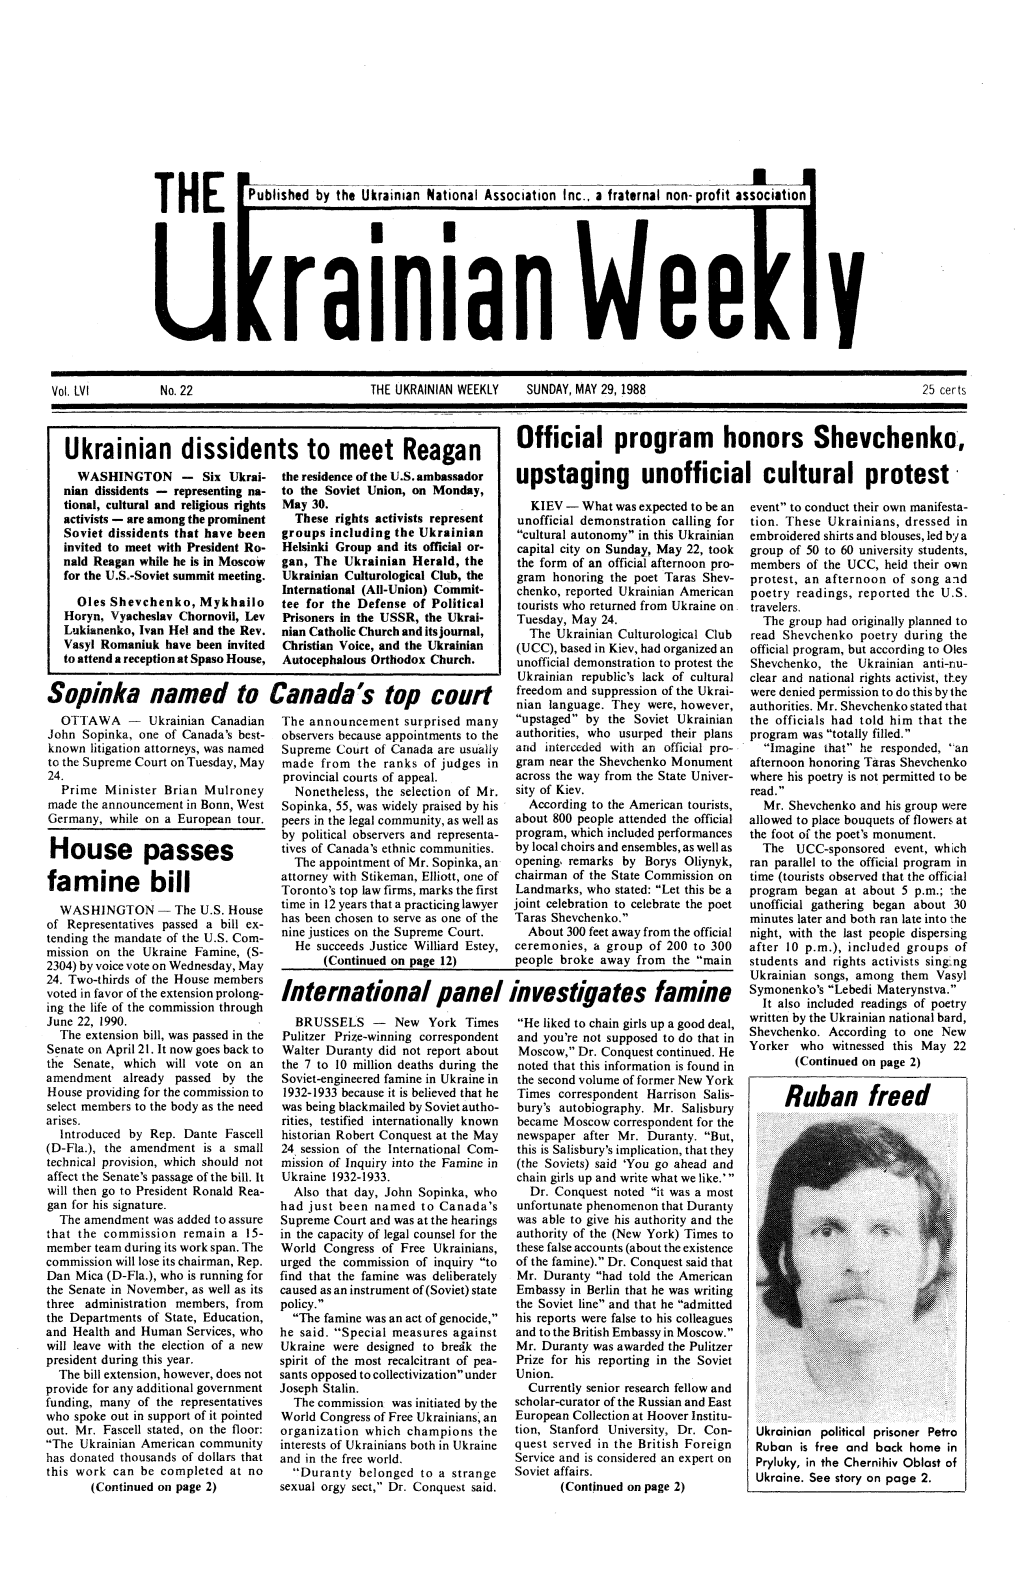 The Ukrainian Weekly 1988, No.22